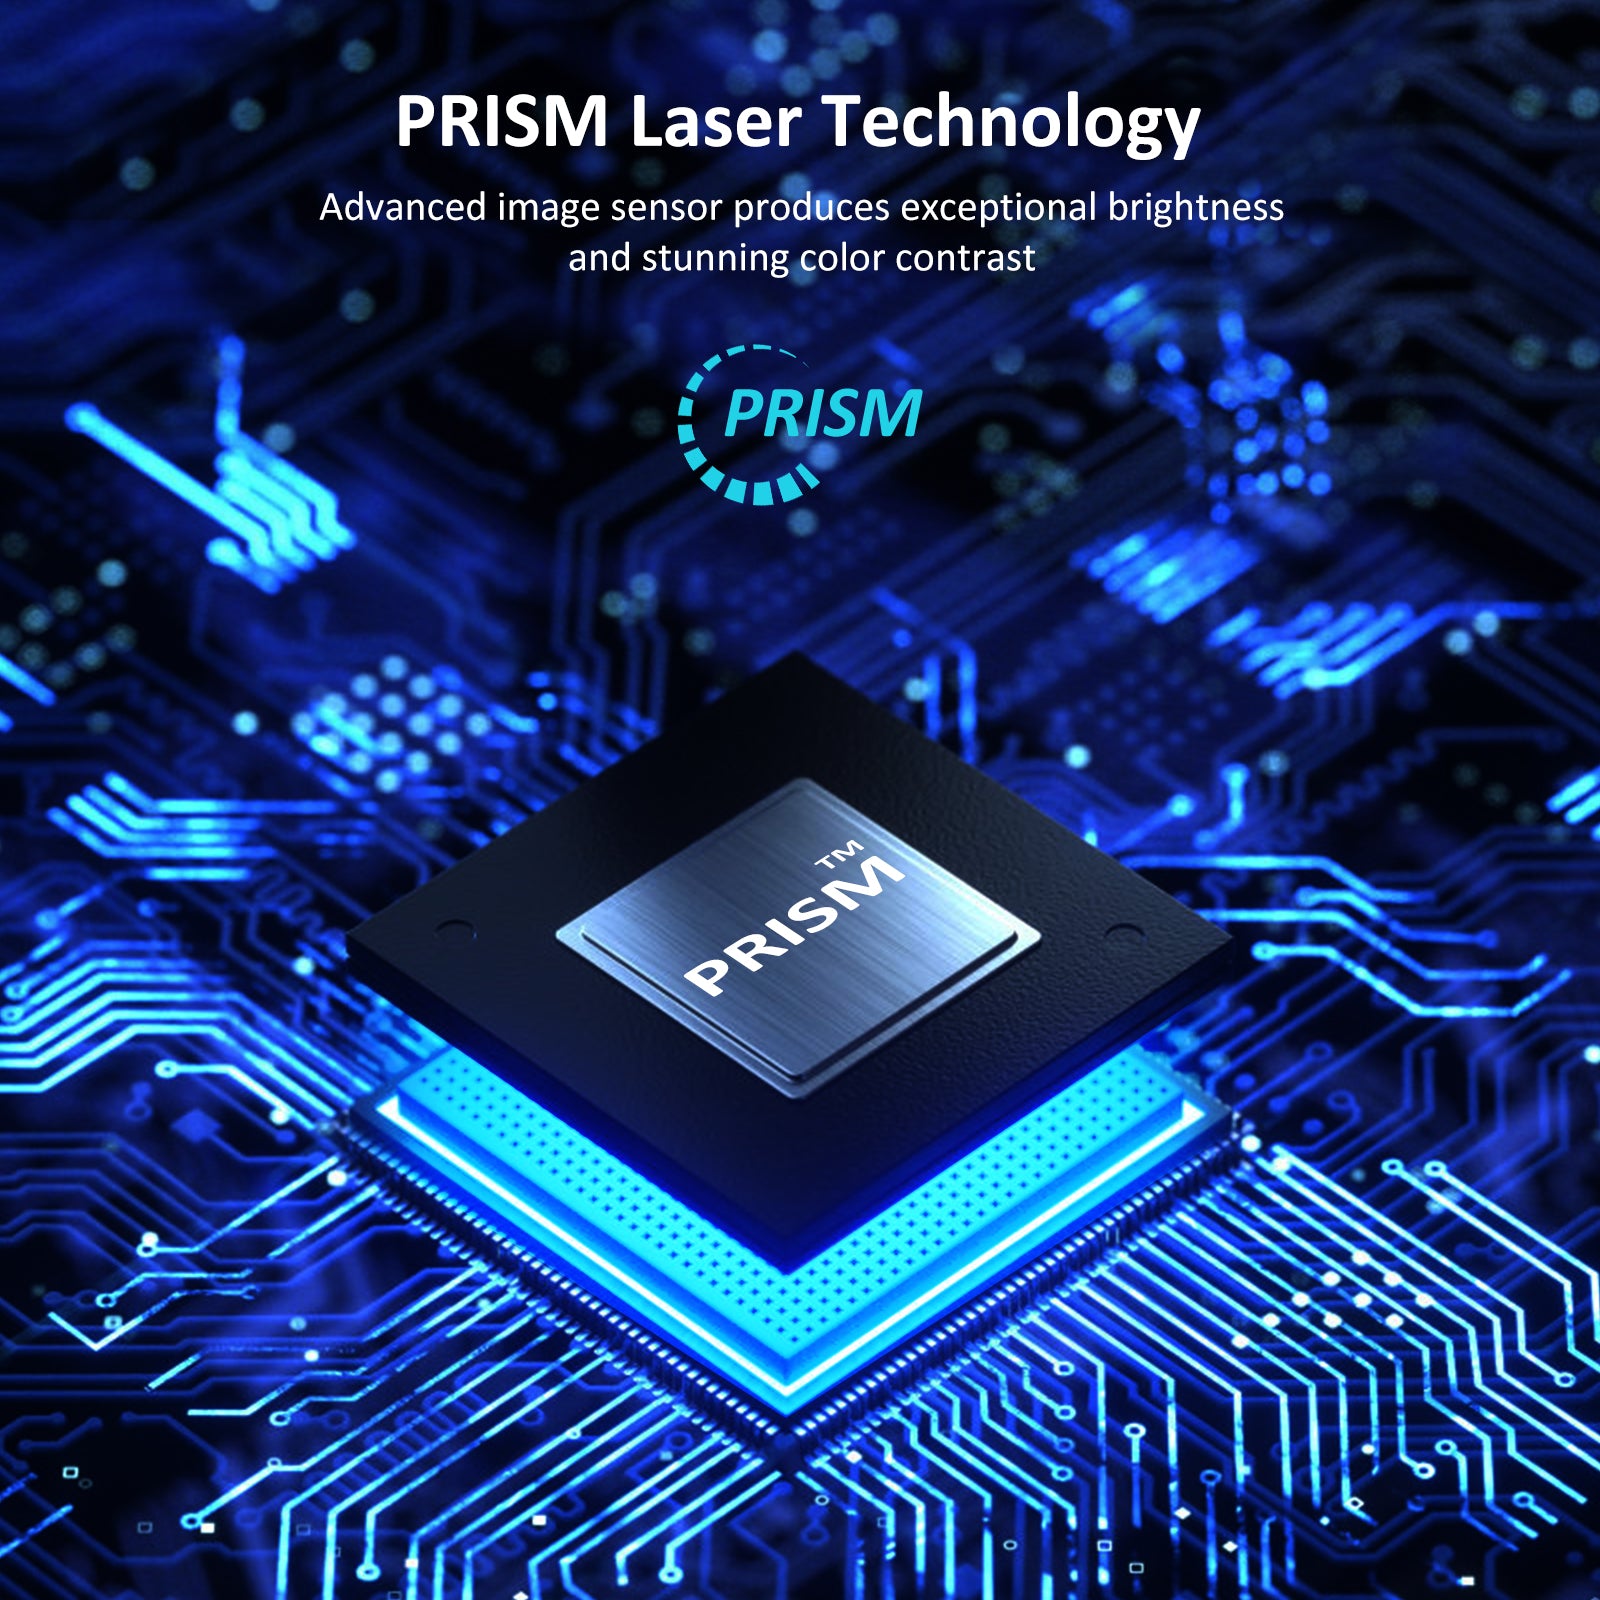 PJ90 projector features PRISM image sensor.